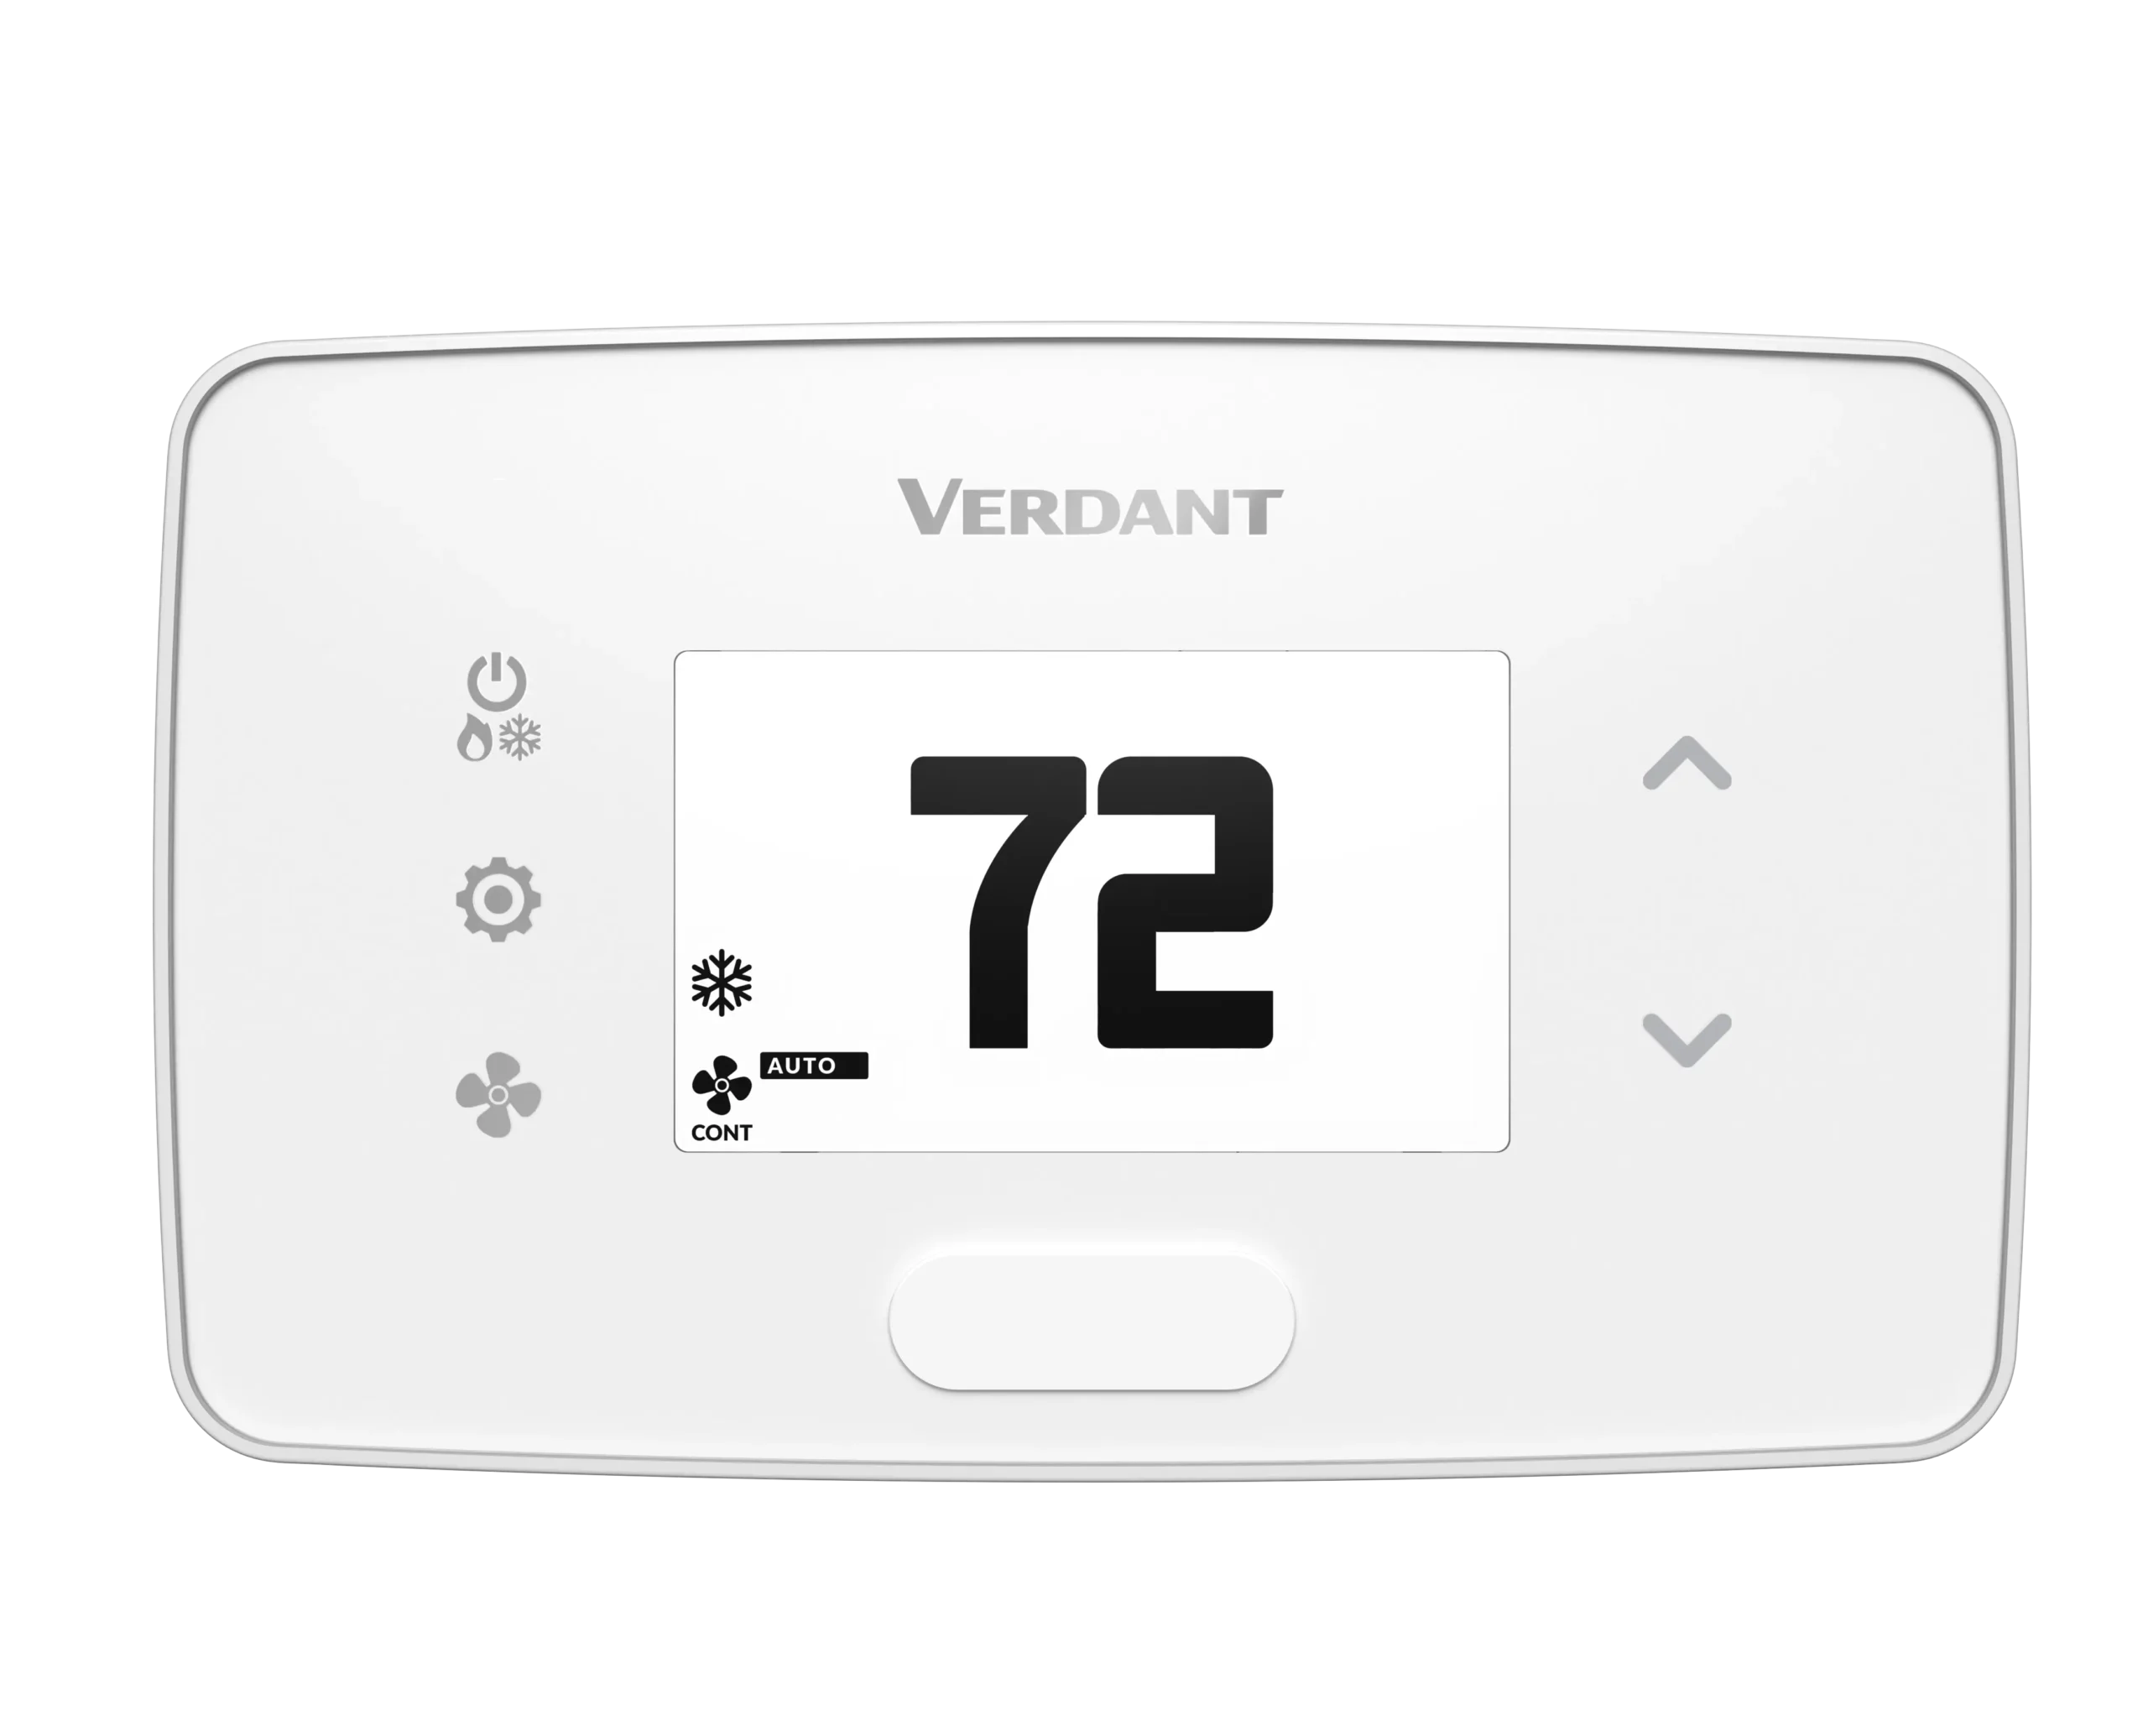 Verdant VX4 energy management thermostat in white